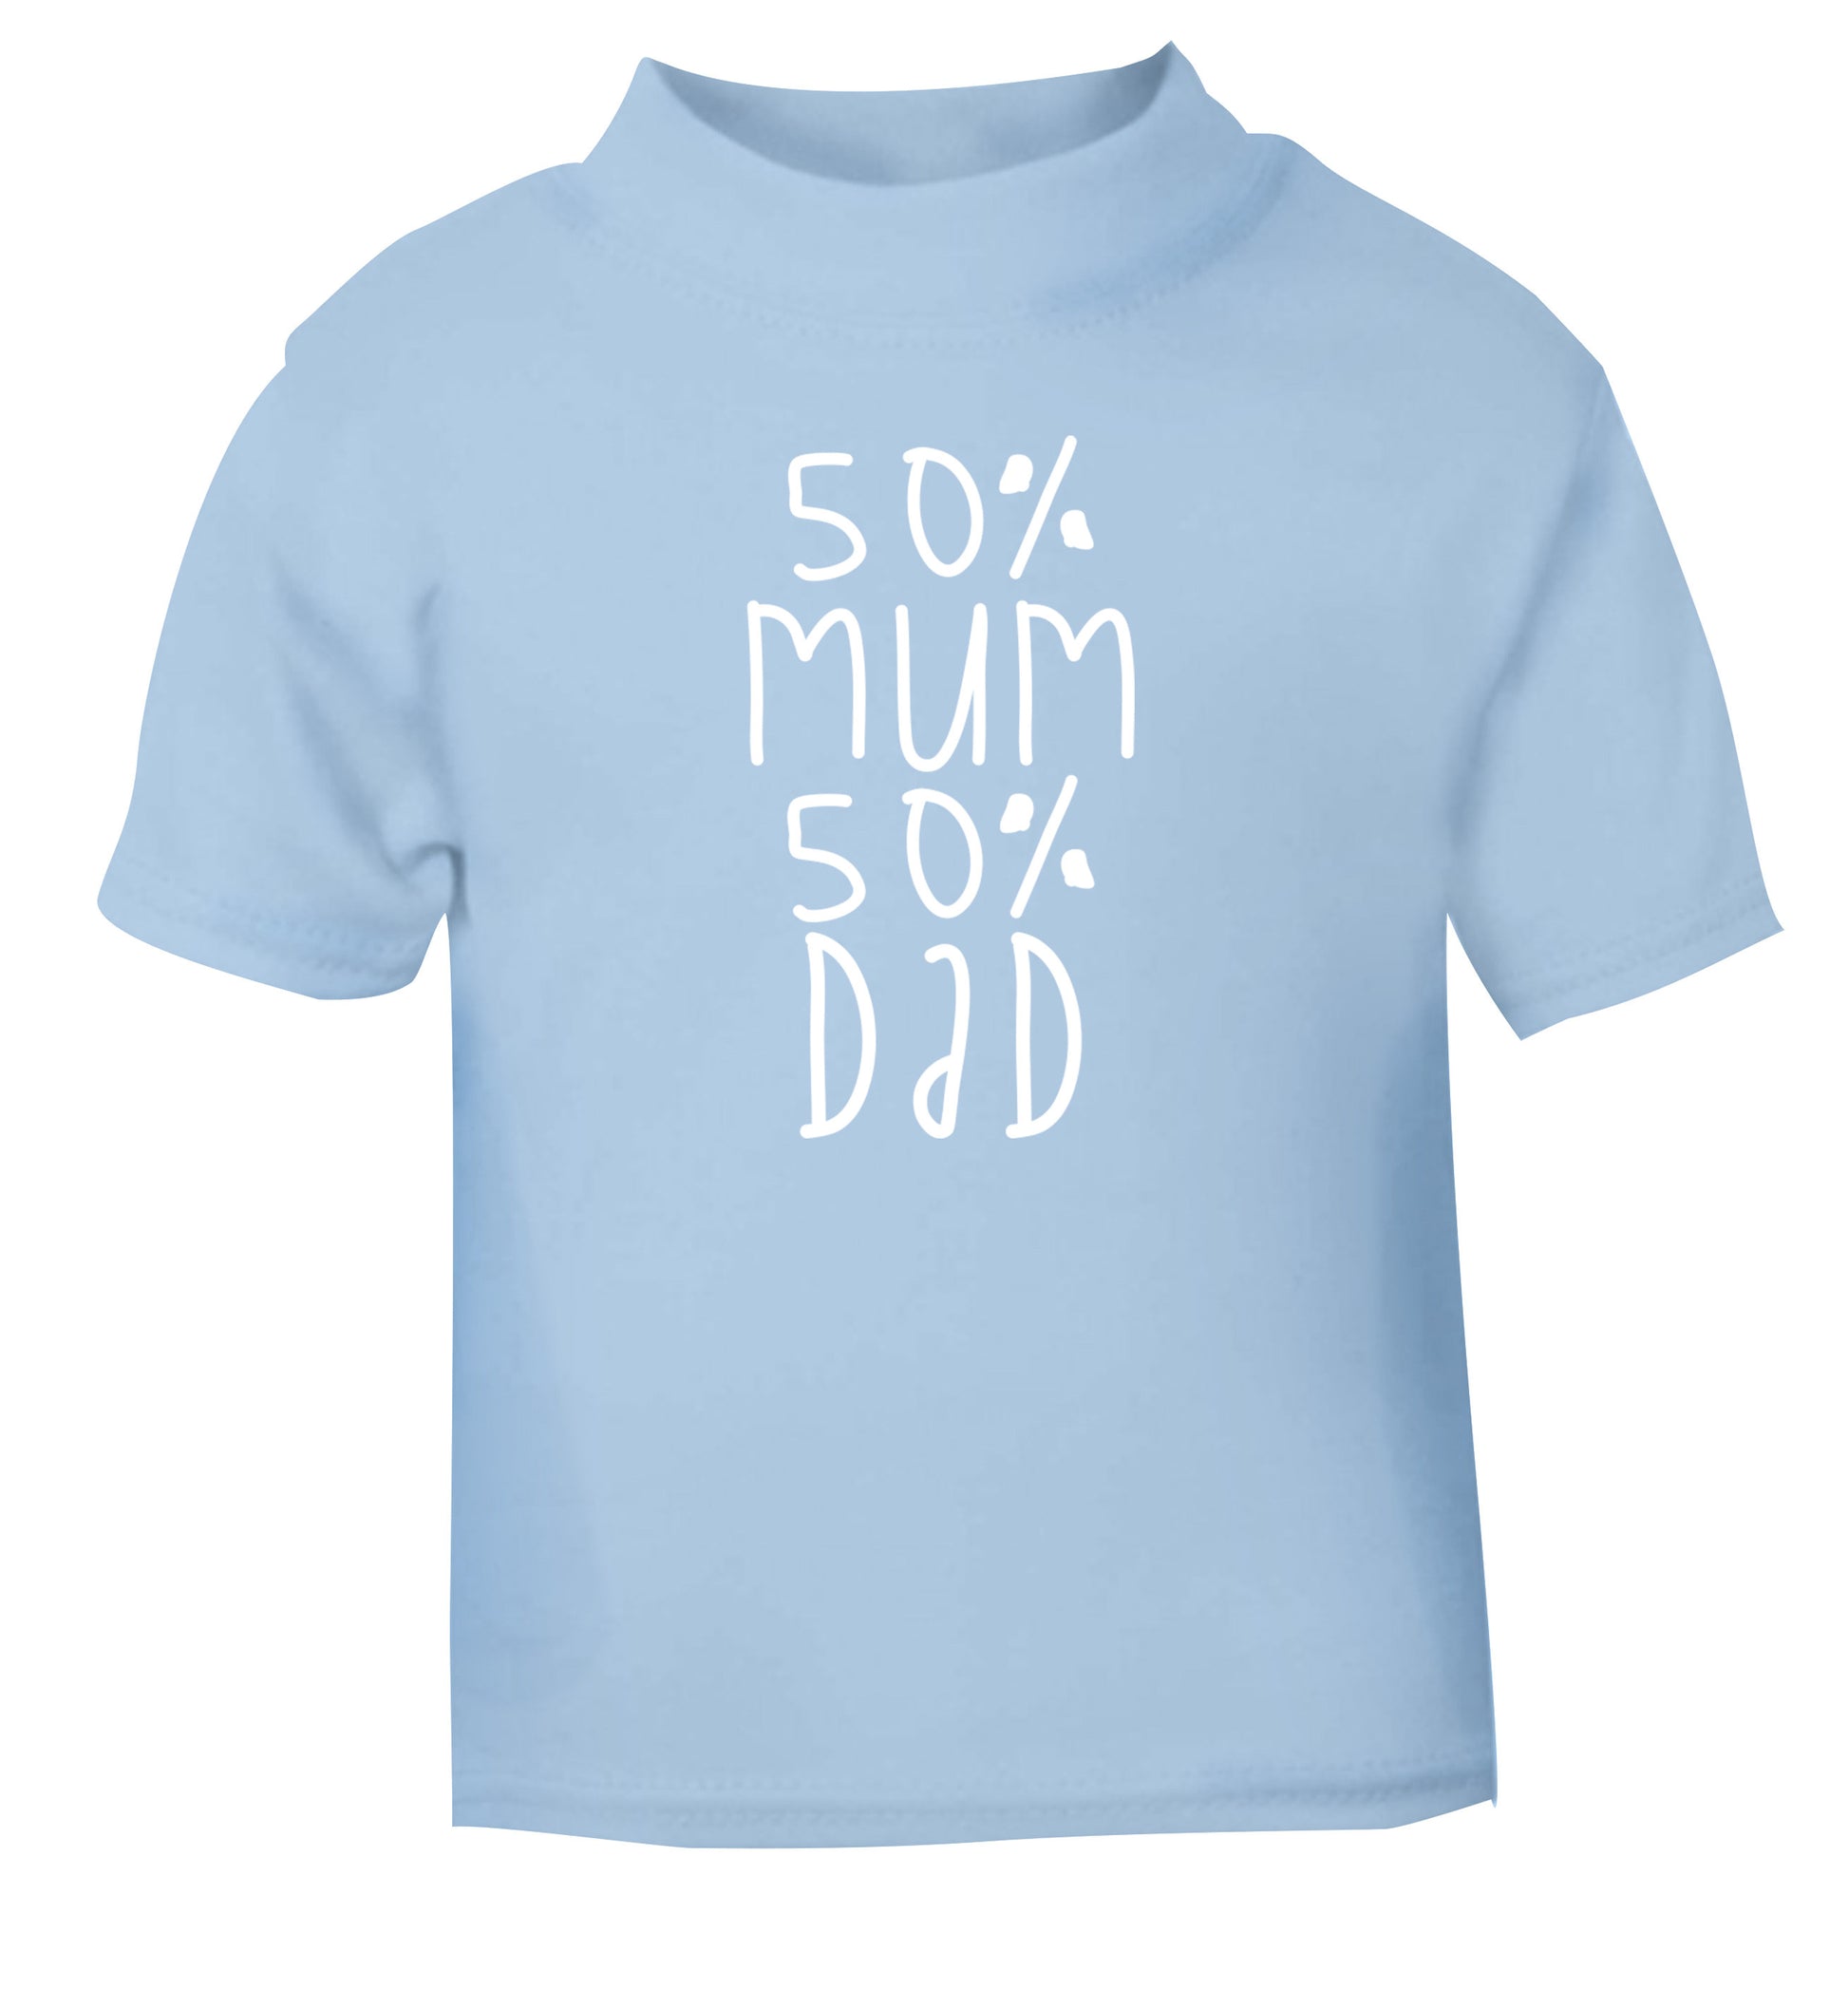 50% mum 50% dad light blue Baby Toddler Tshirt 2 Years